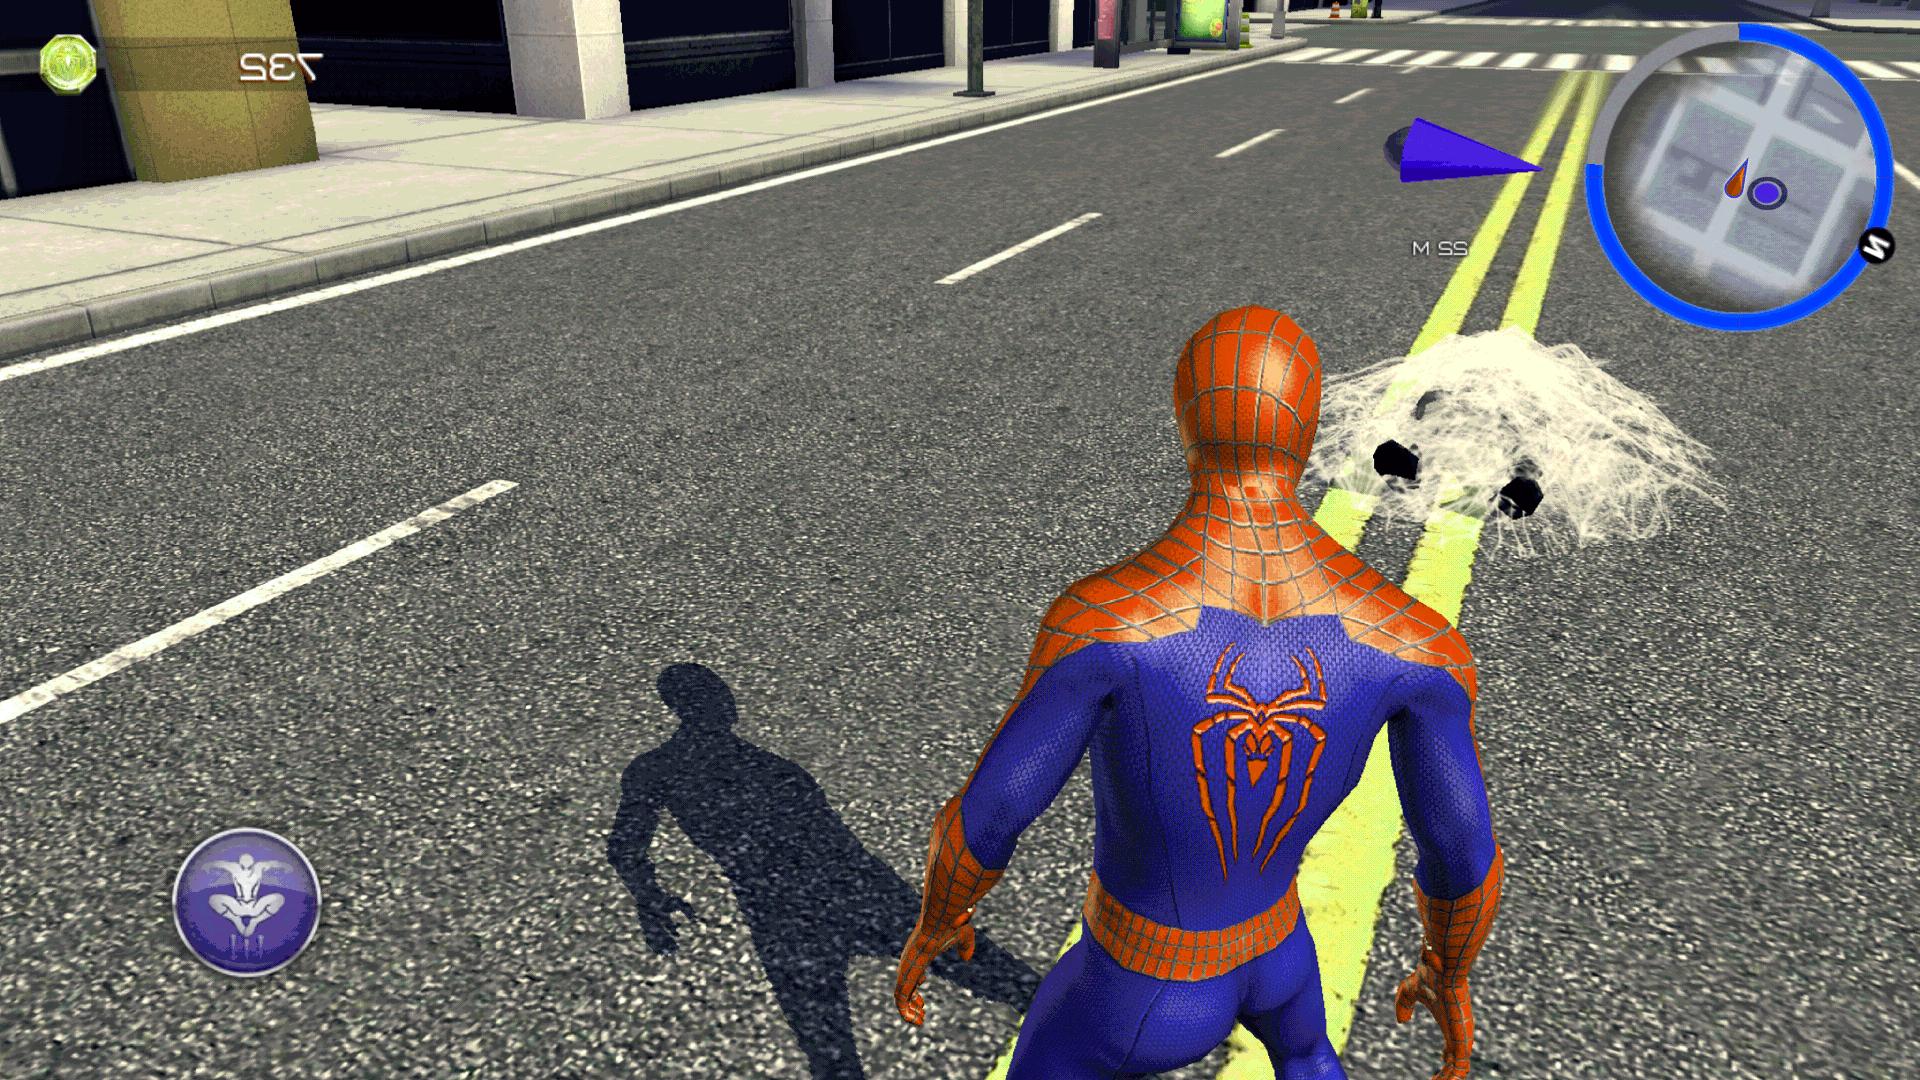 The man игра на андроид. The amazing Spider-man 2 игра. Человек паук амазинг игра. The amazing Spider man 2 игра геймплей. Человек паук амазинг 1.